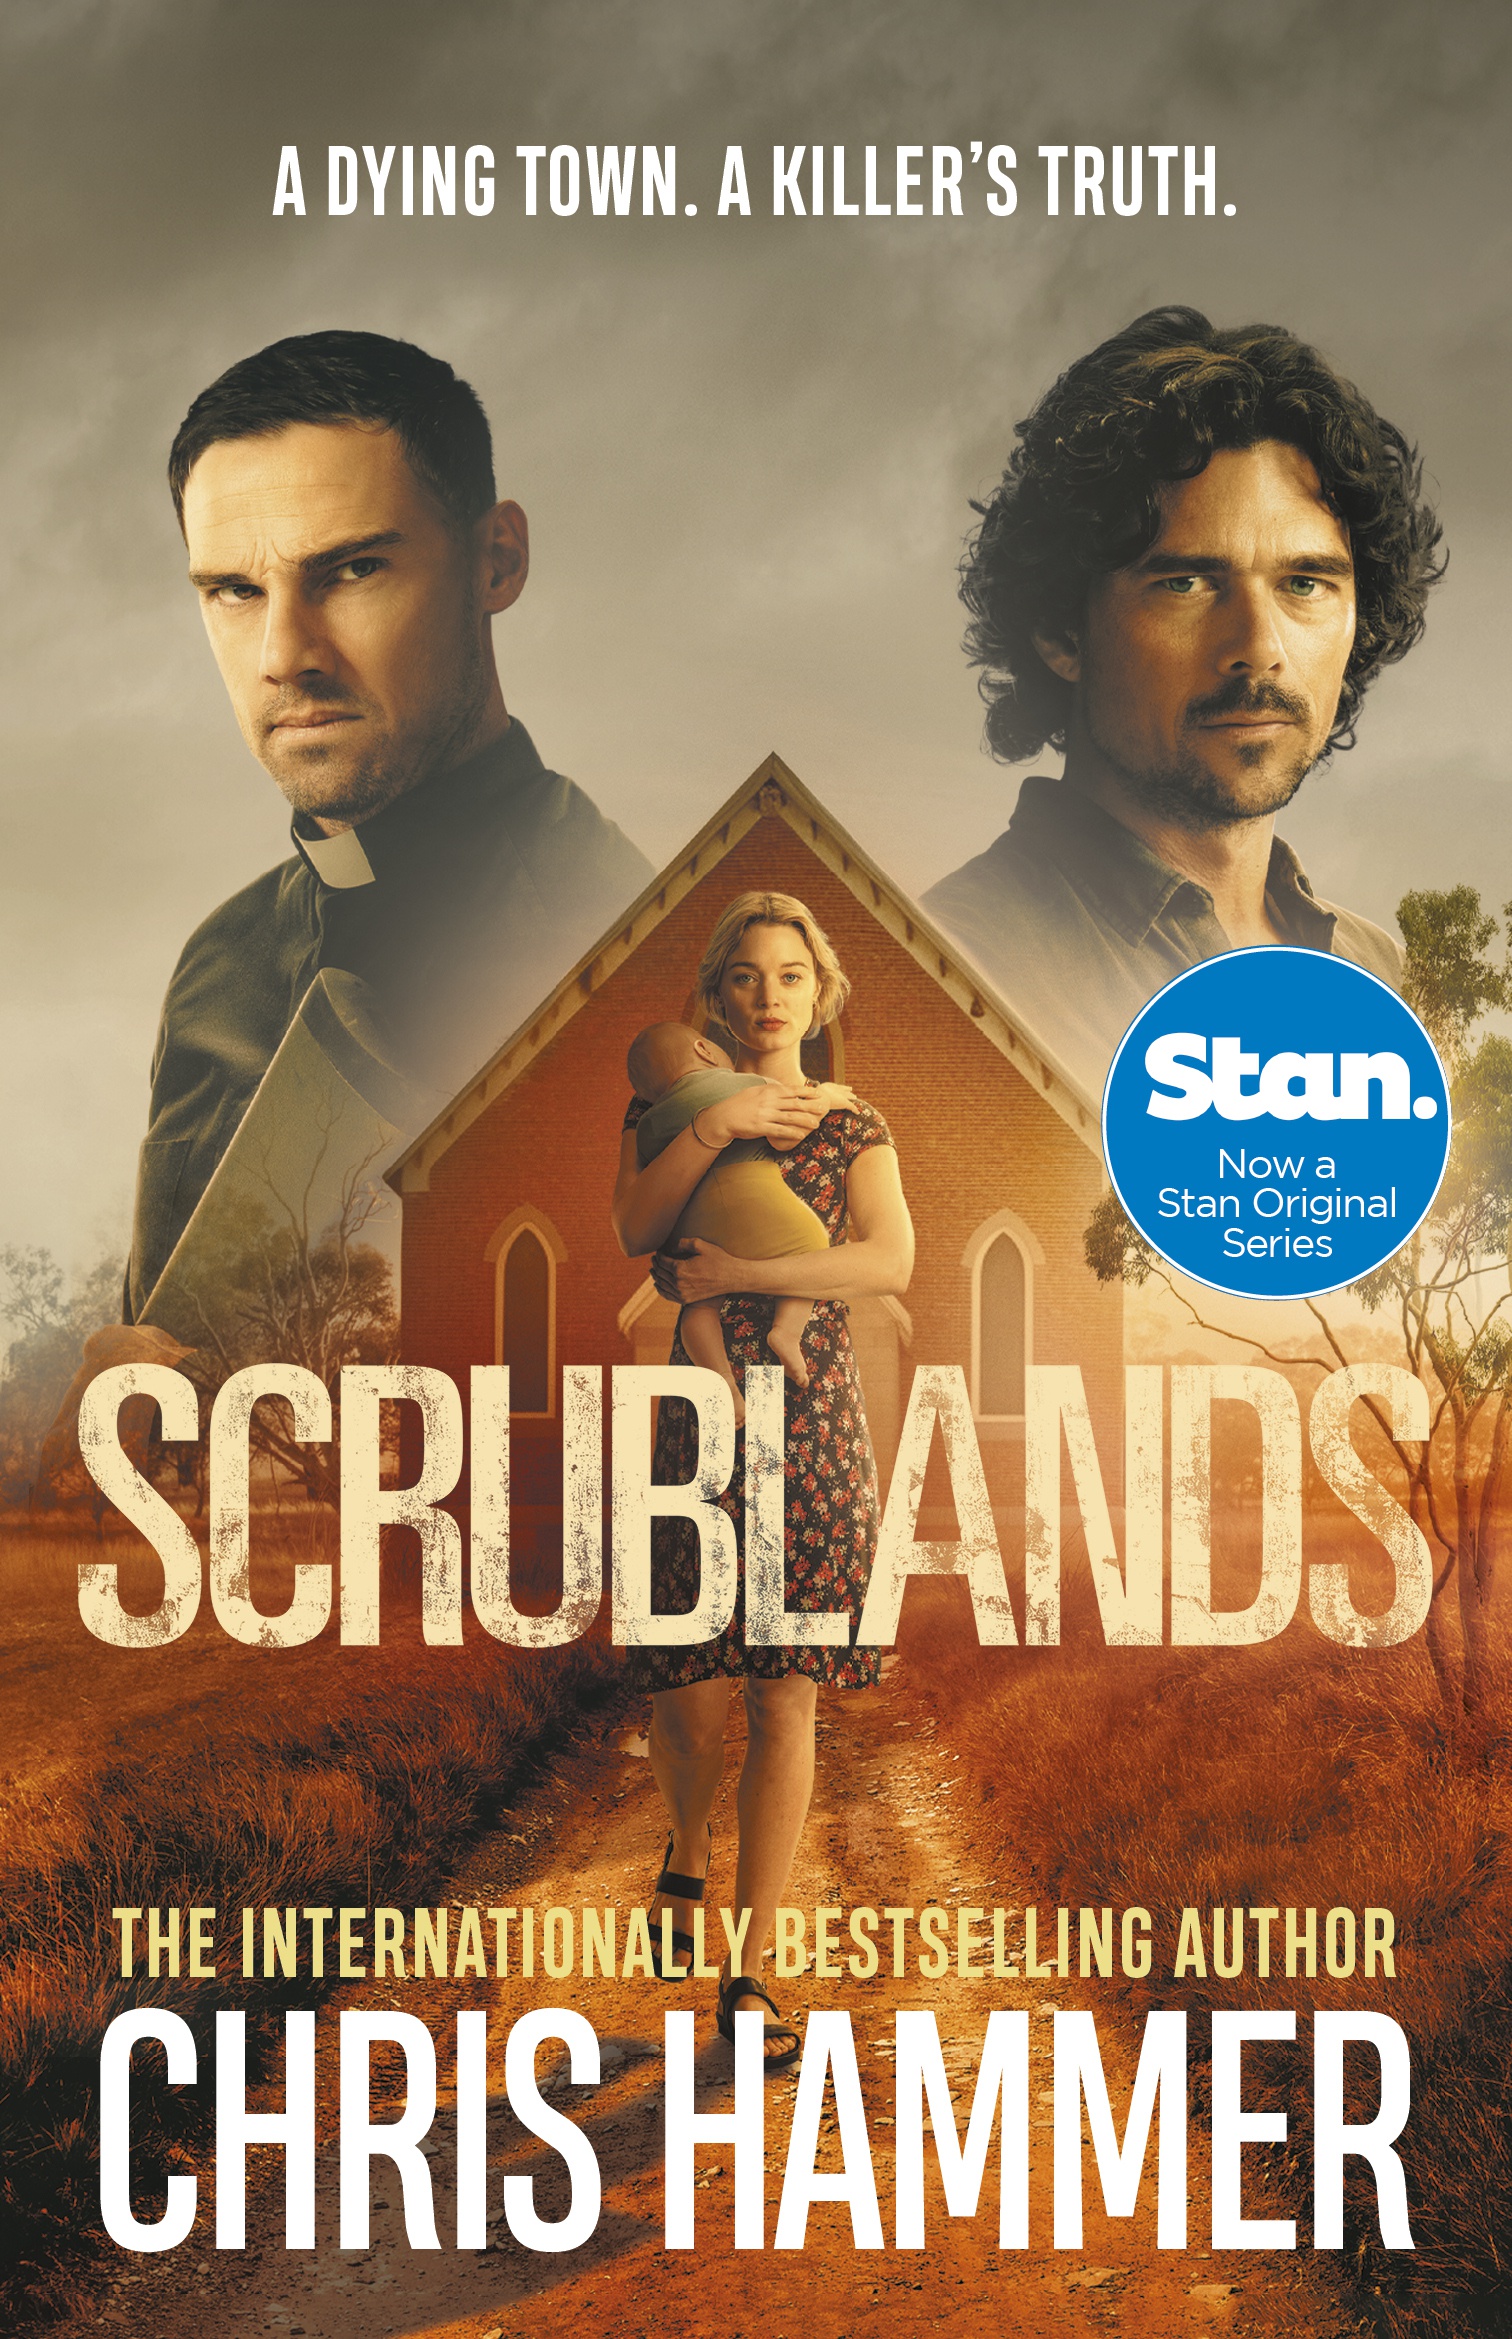 Scrublands: Season 1